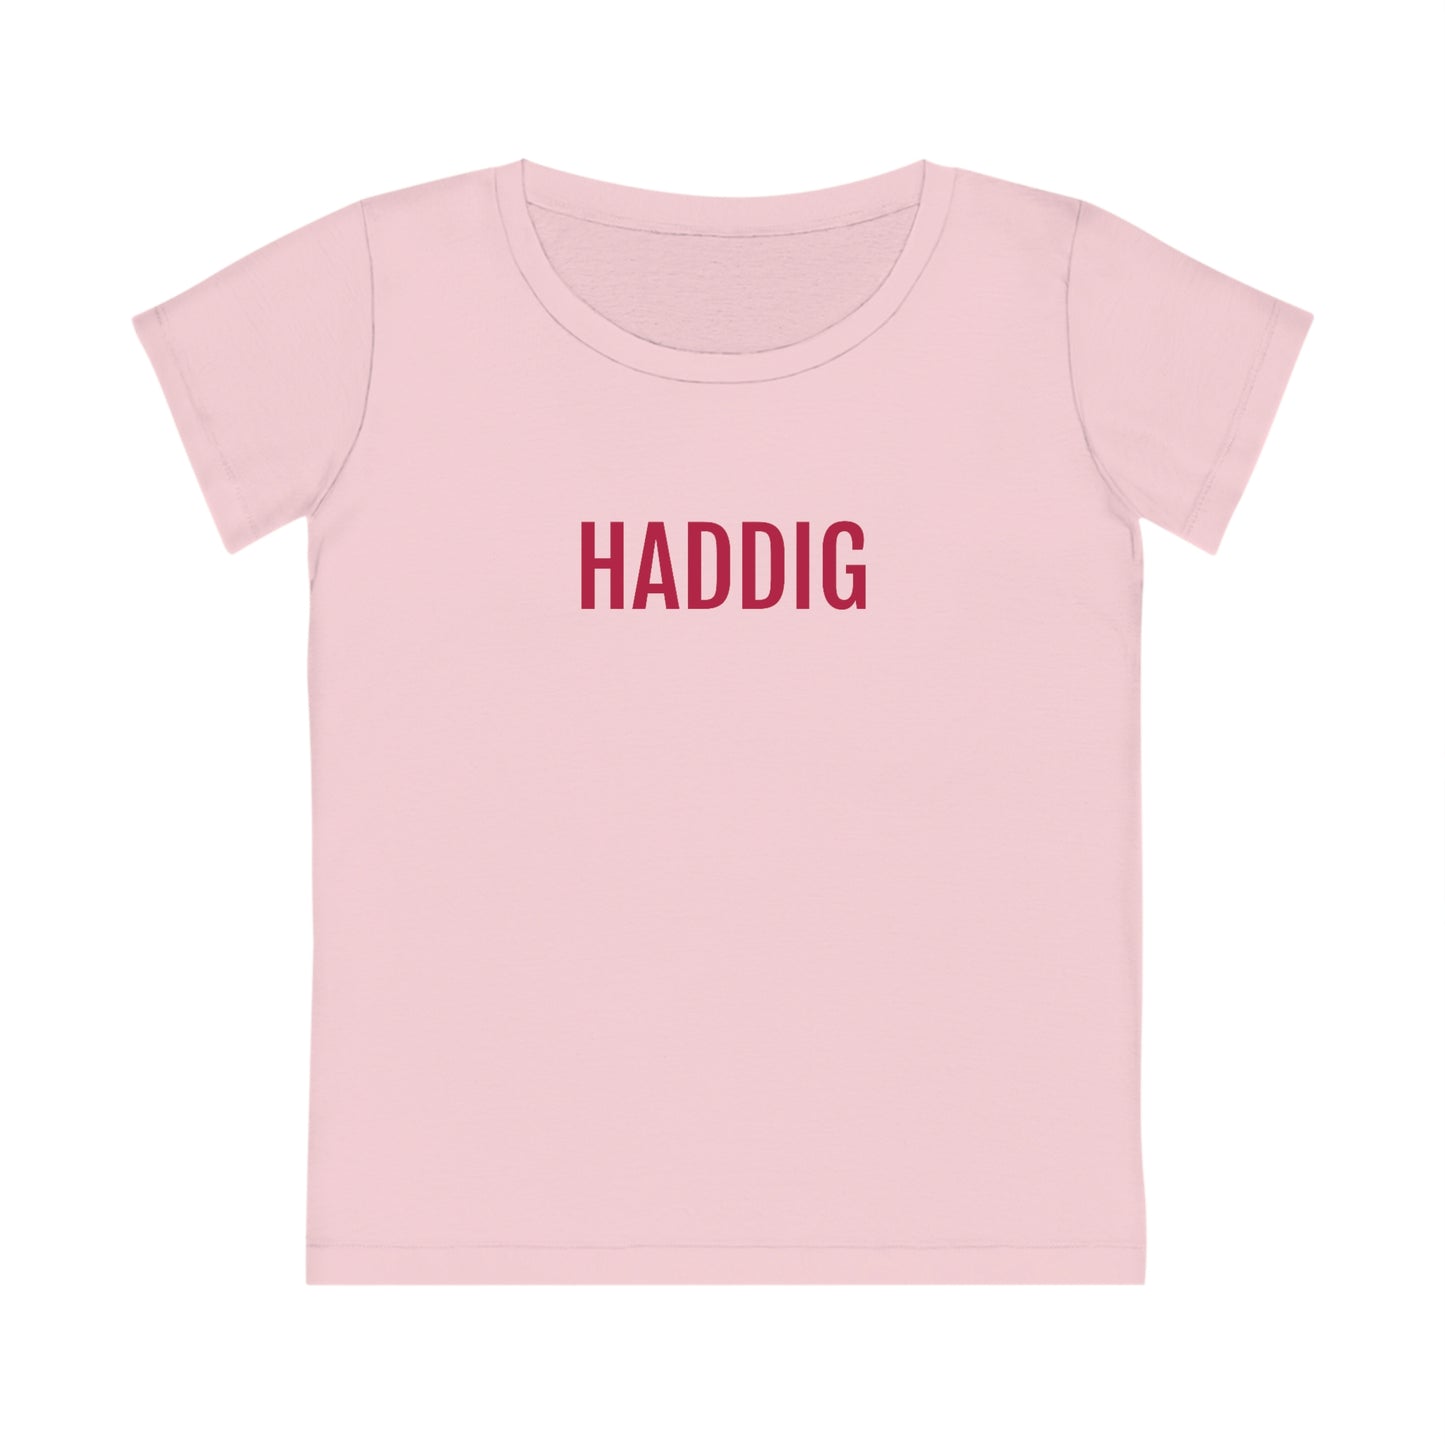 HADDIG | Dames T-Shirt uit Limburg